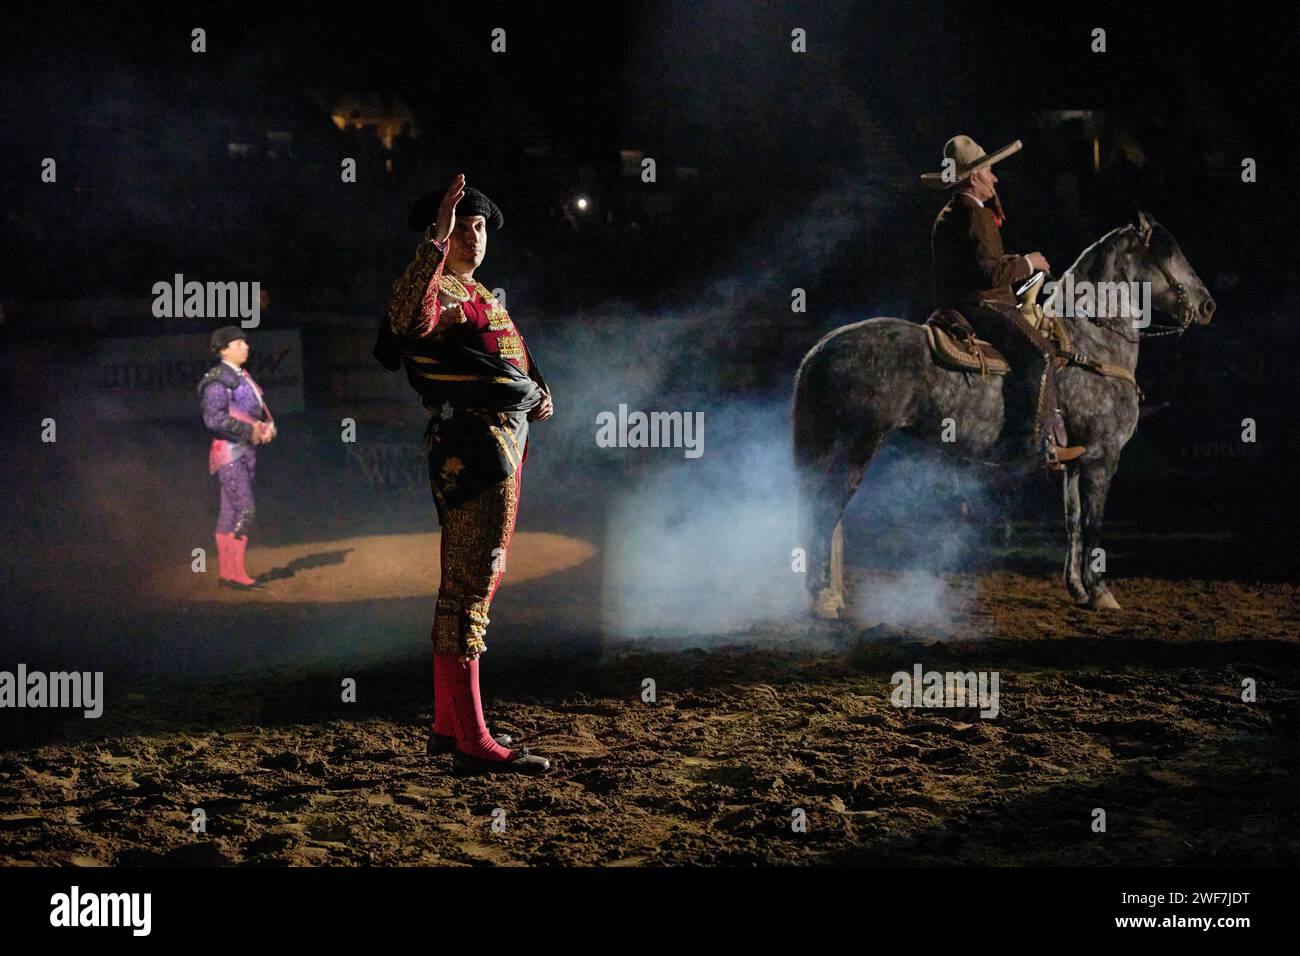 Matador being introduced at rodeo Stock Photo